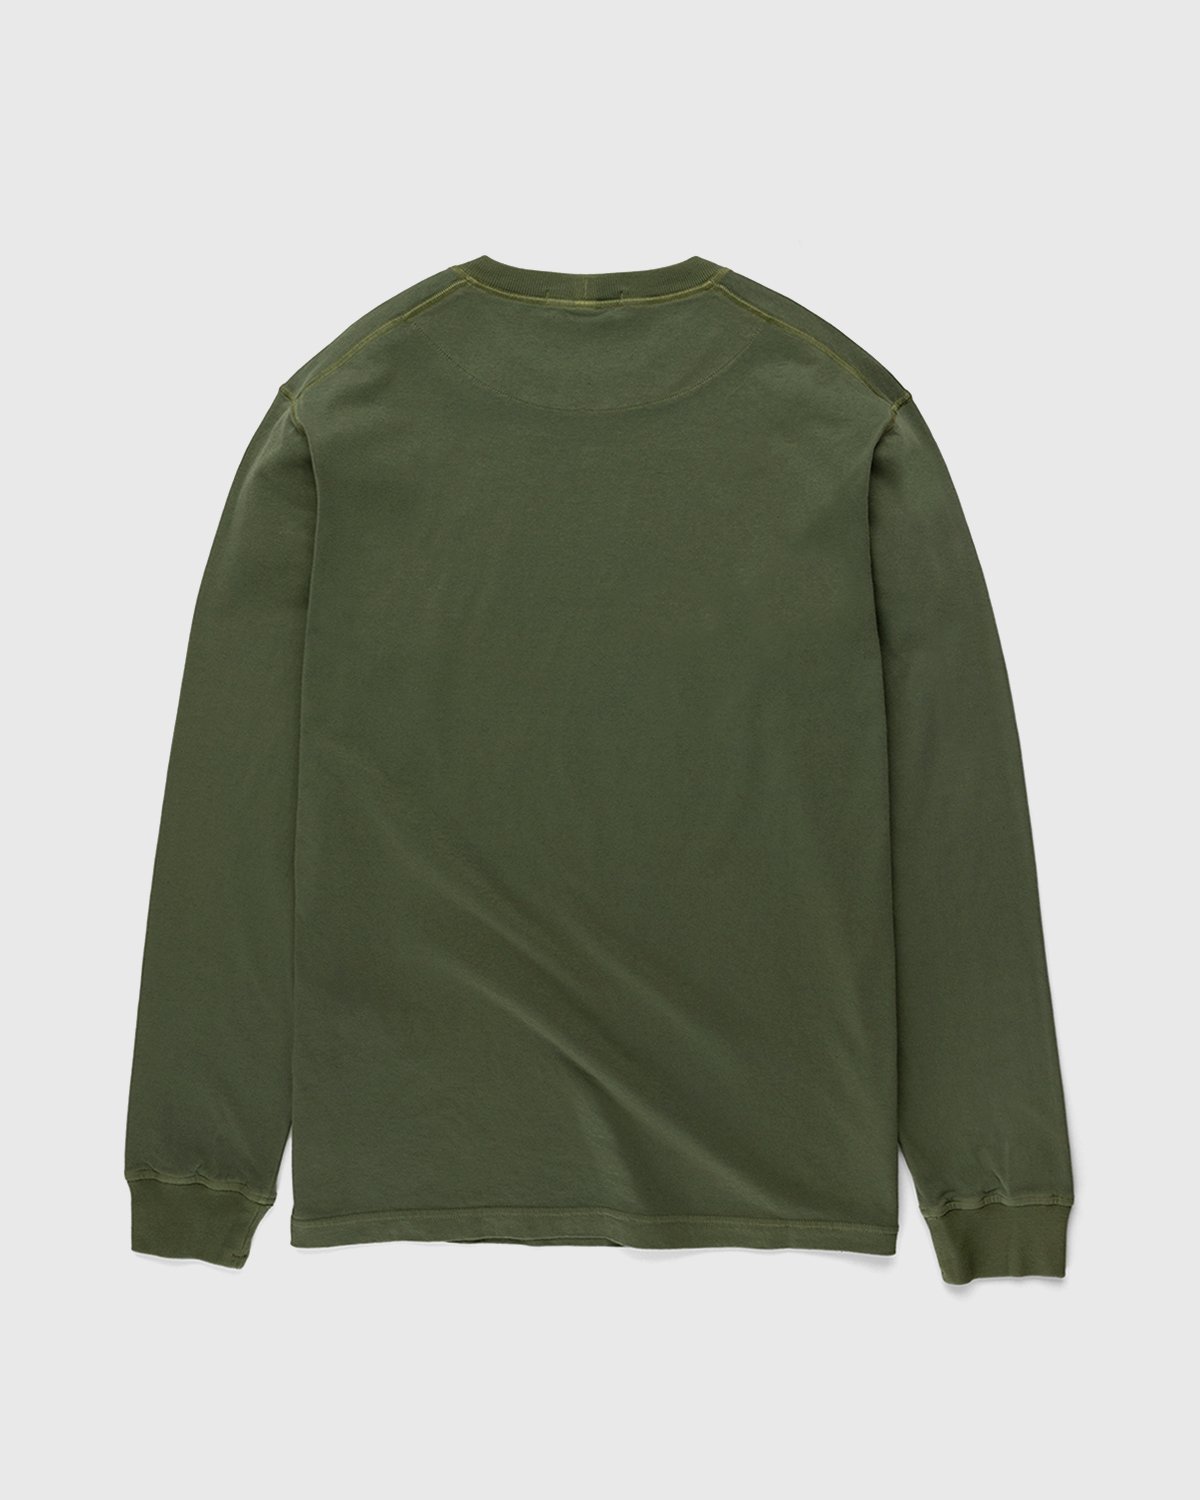 Stone Island - 21857 Garment-Dyed Fissato T-Shirt Olive Green - Clothing - Green - Image 2